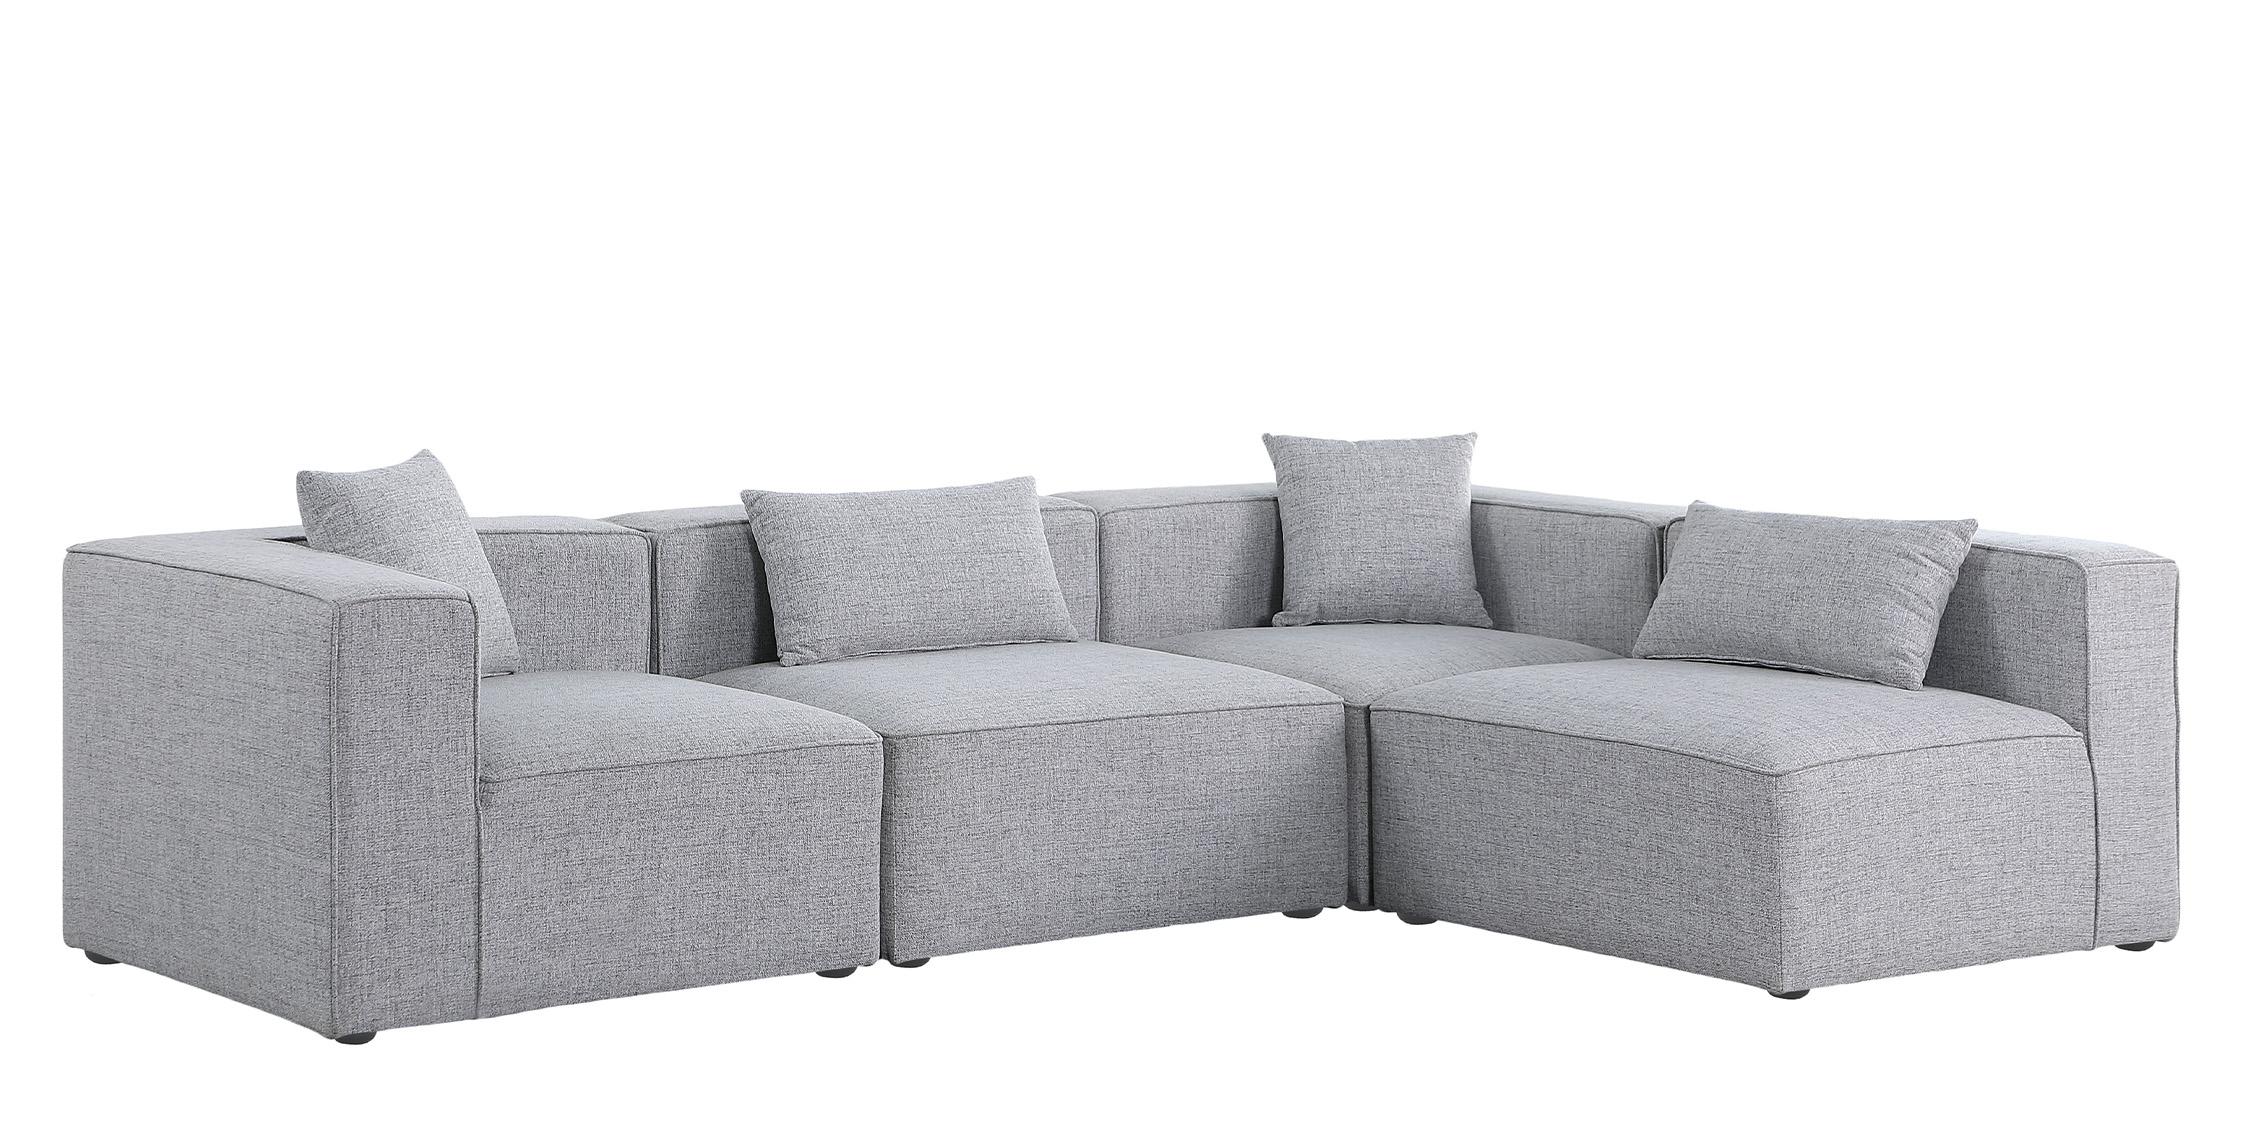 Contemporary, Modern Modular Sectional Sofa CUBE 630Grey-Sec4B 630Grey-Sec4B in Gray Linen